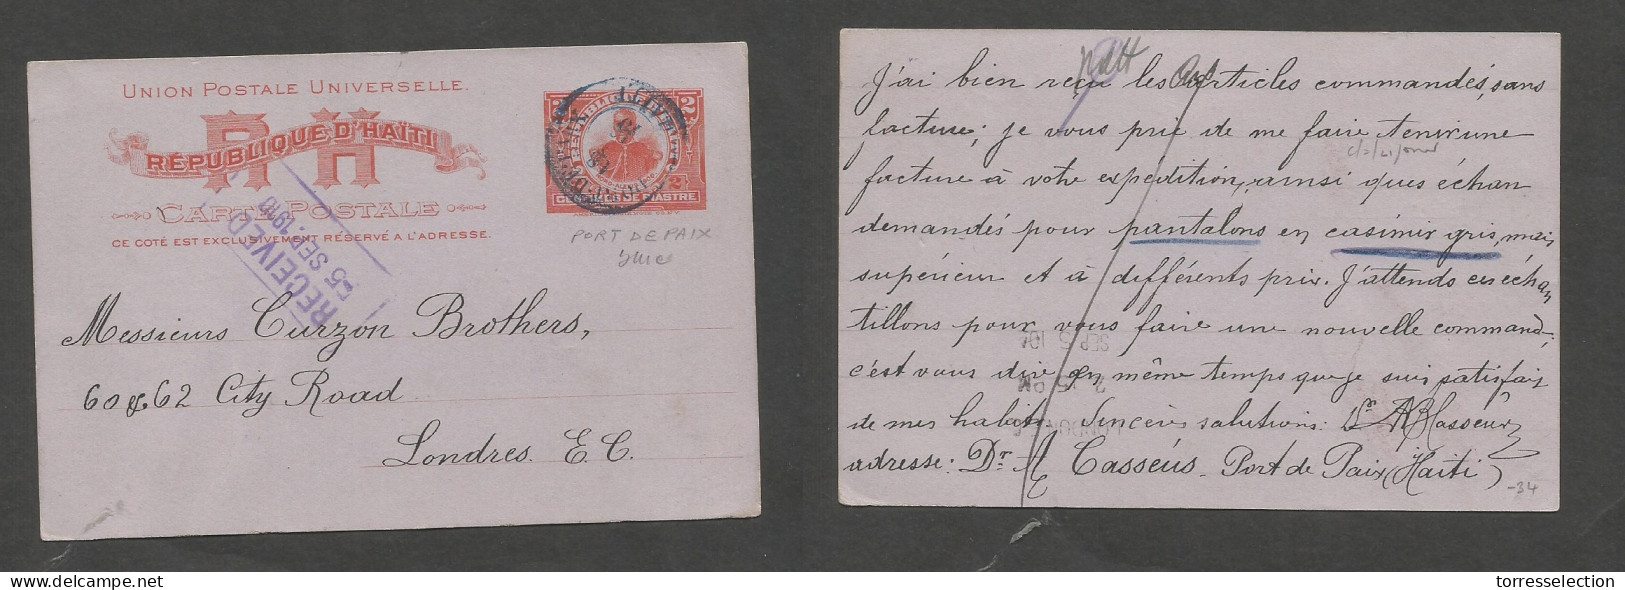 HAITI. 1910 (18 Aug) Port Paix - London, UK (5 Sept) 2c Red Stat Card. Fine Used. Arrival Cachet. SALE. - Haiti